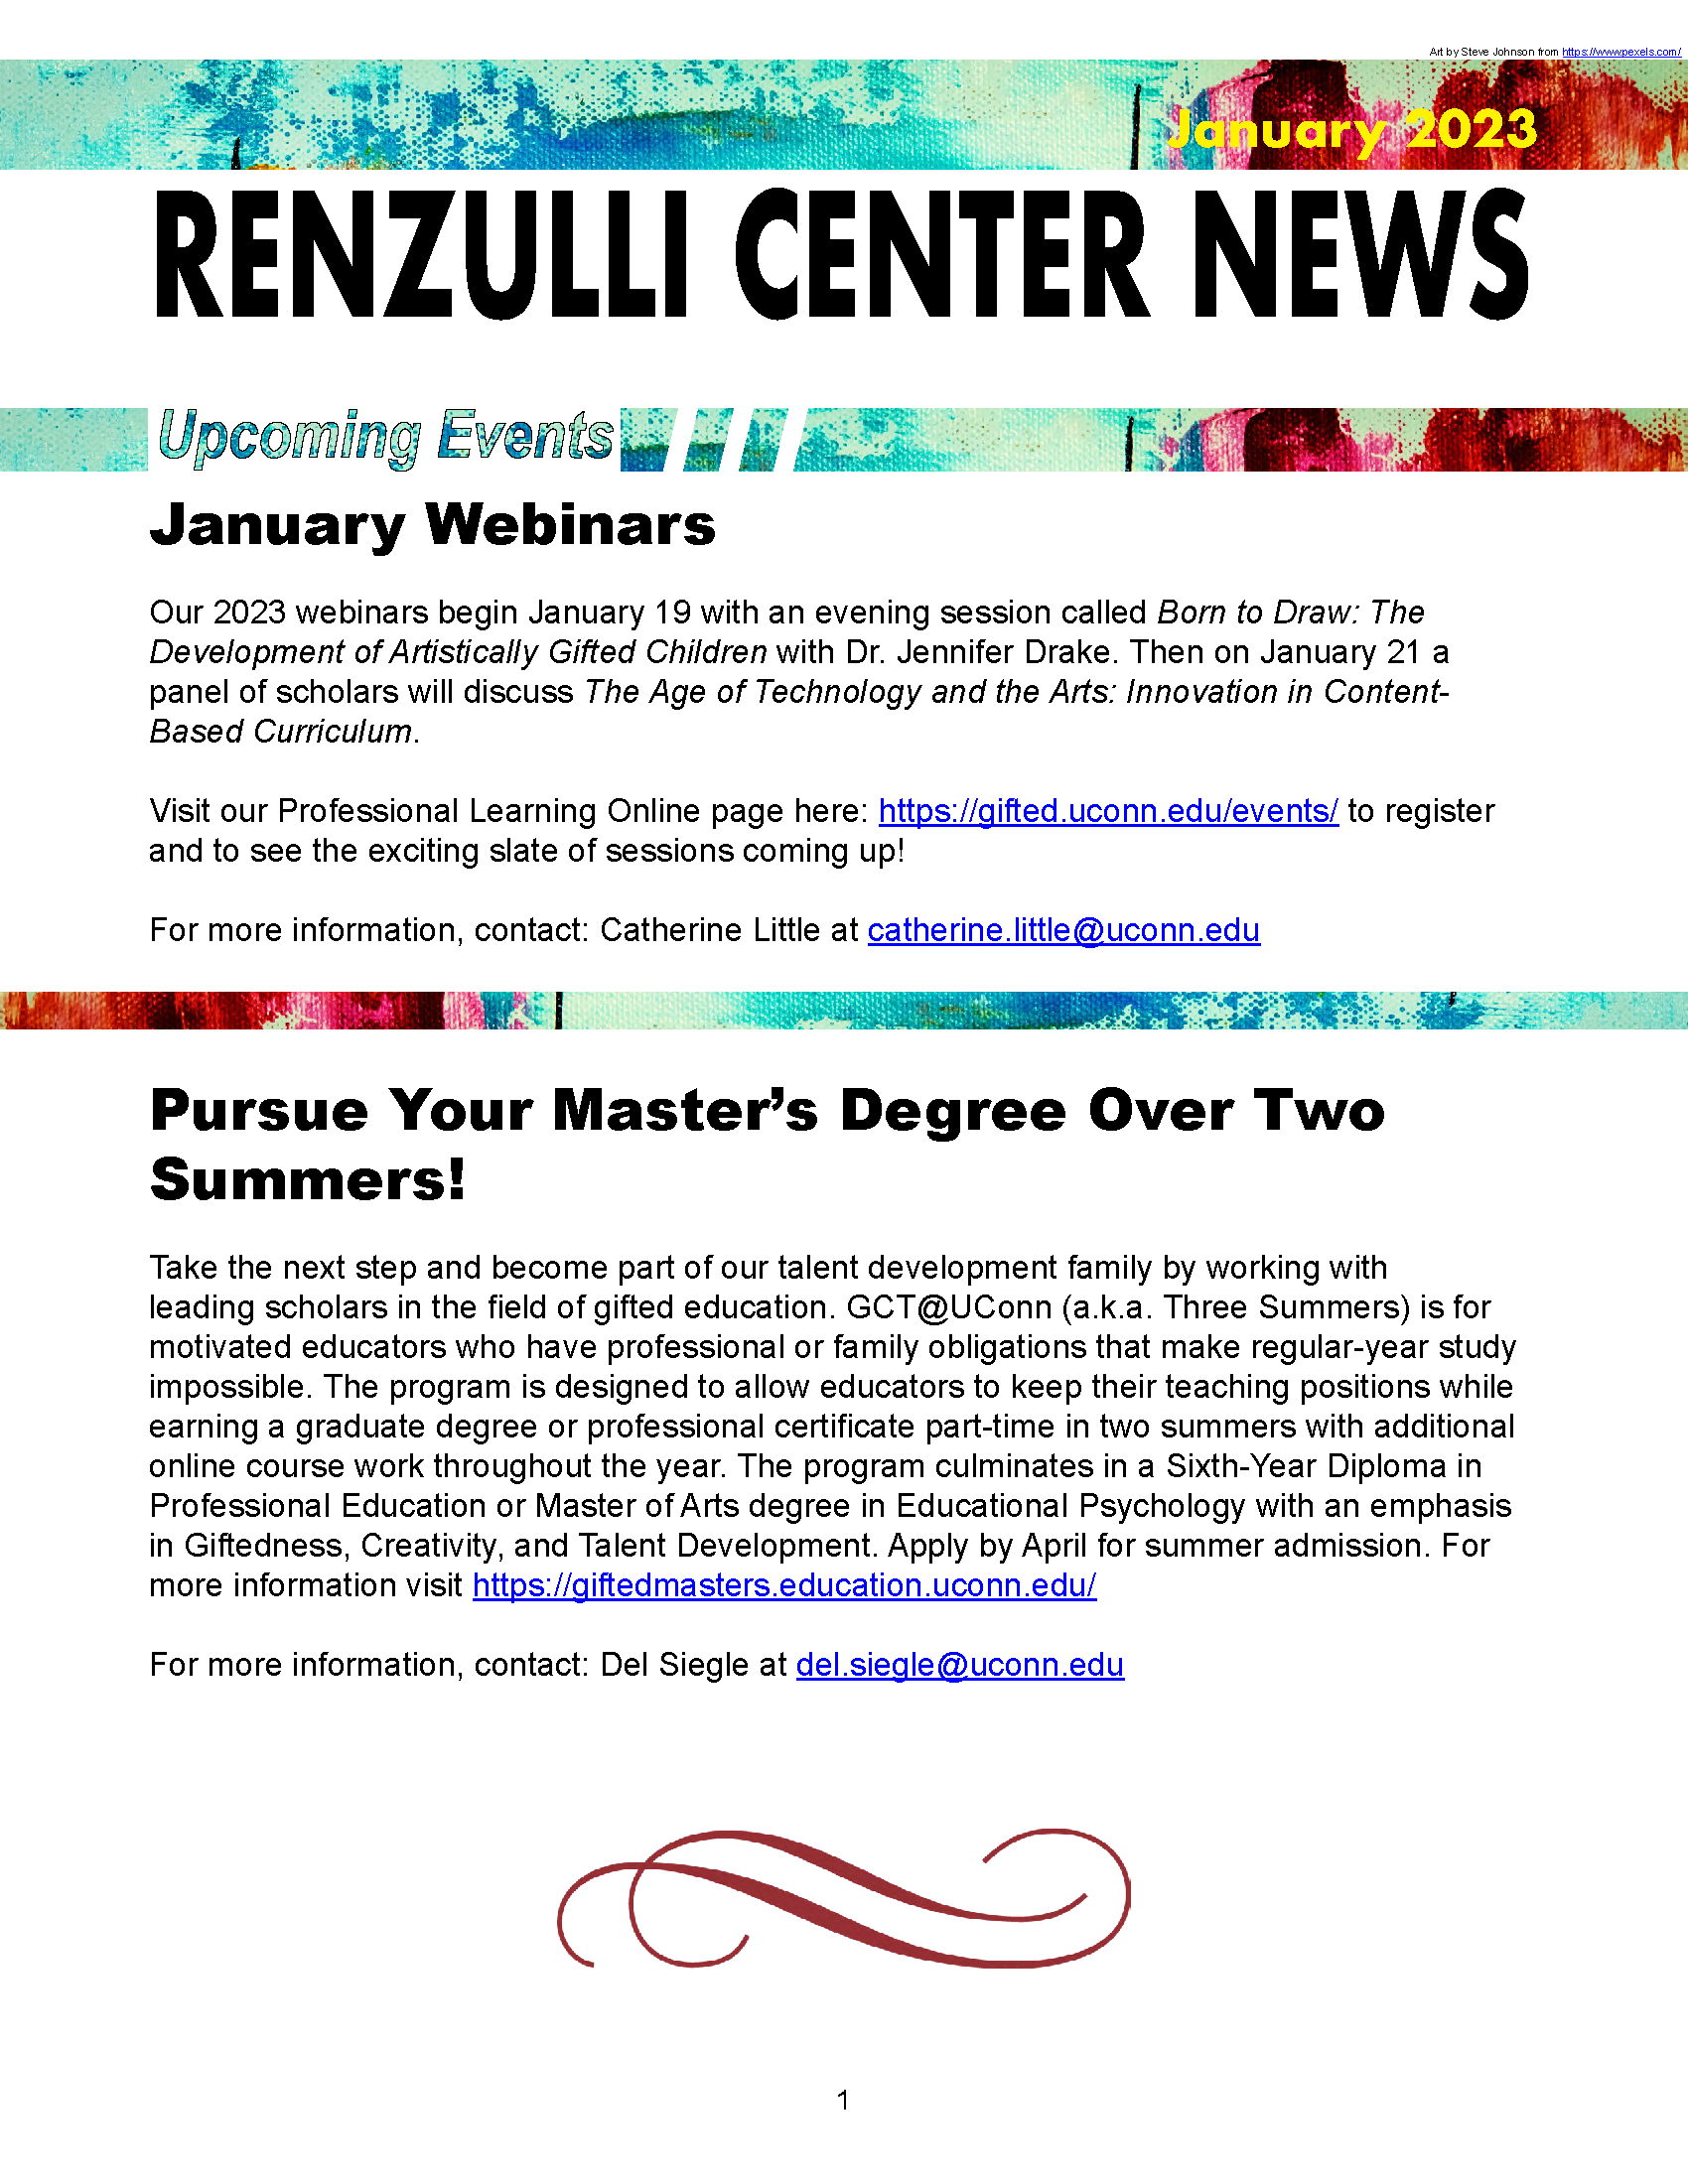 January 2023 Renzulli News Cover Graphic